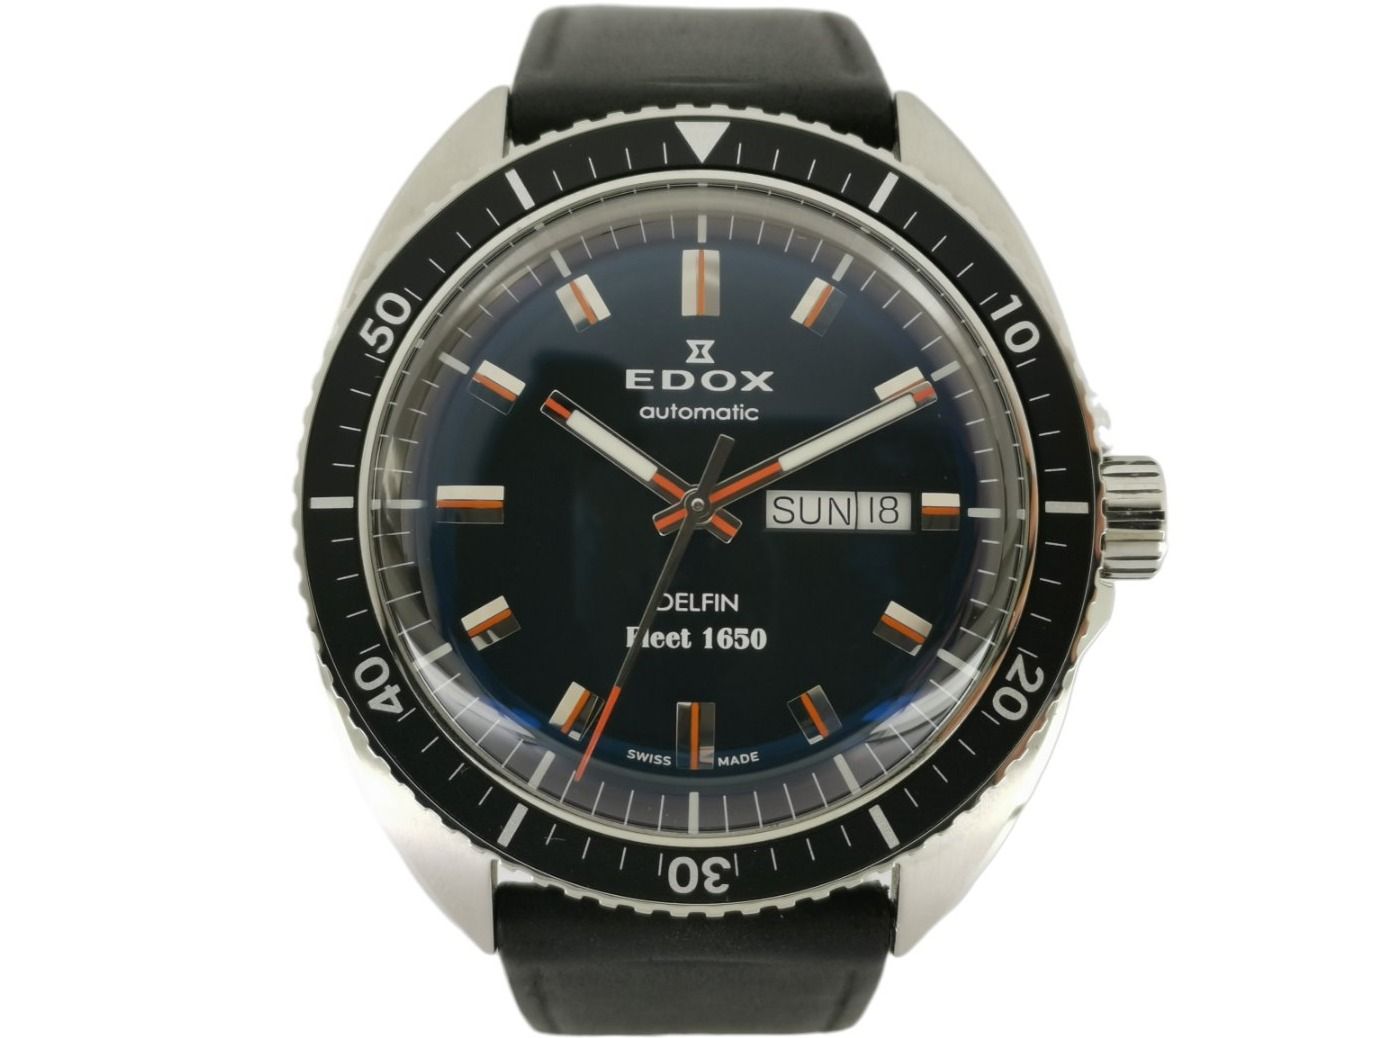 Edox Delfin Fleet 1650 Limited Edition